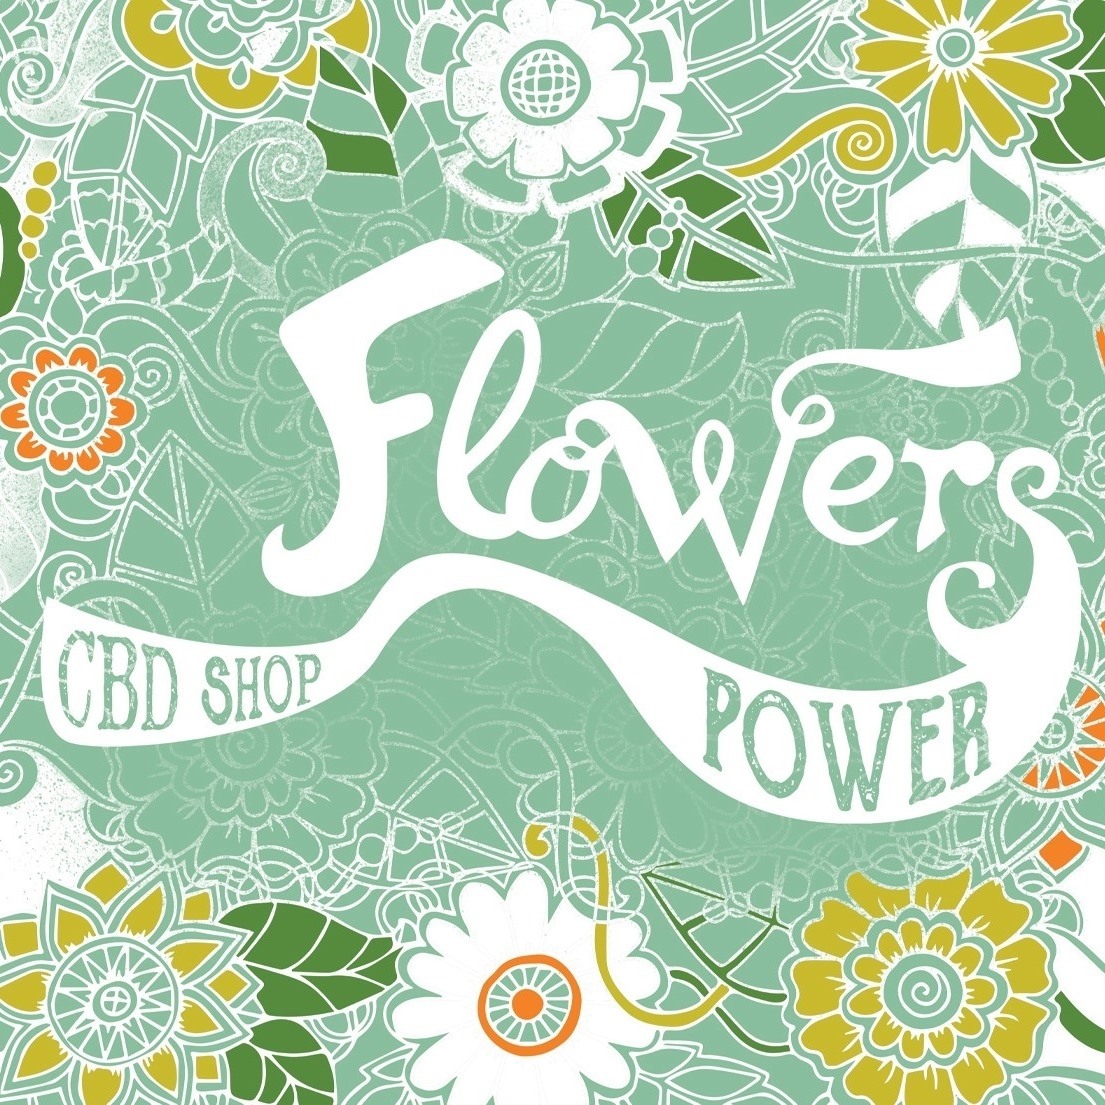 Flowers Power CBD Shop - Nantes